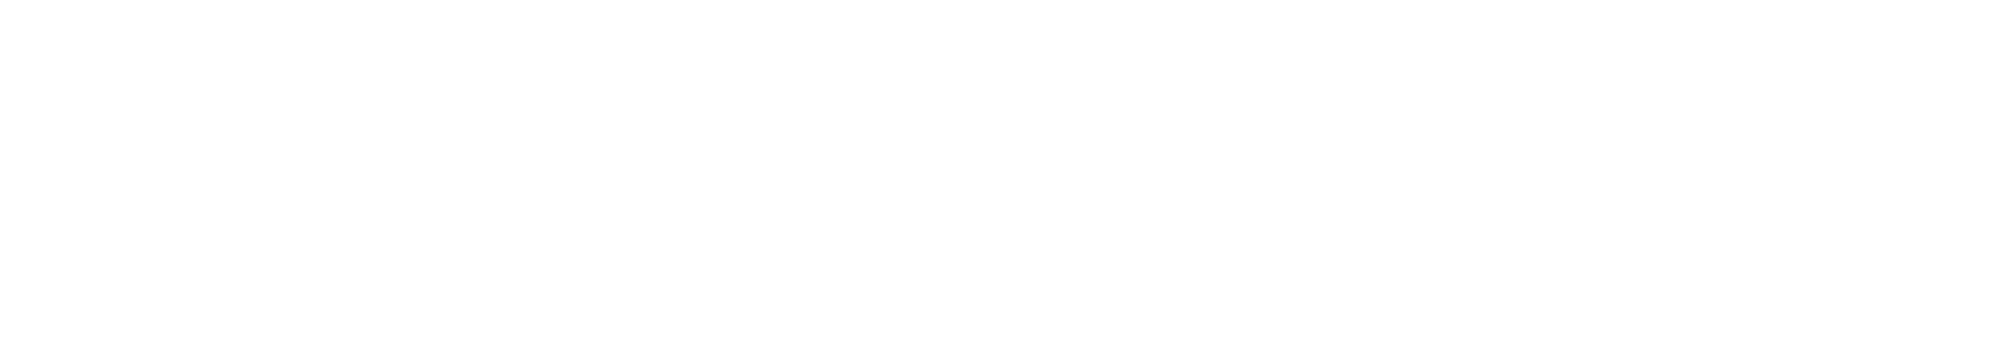 BasisTech logo in white (PNG)